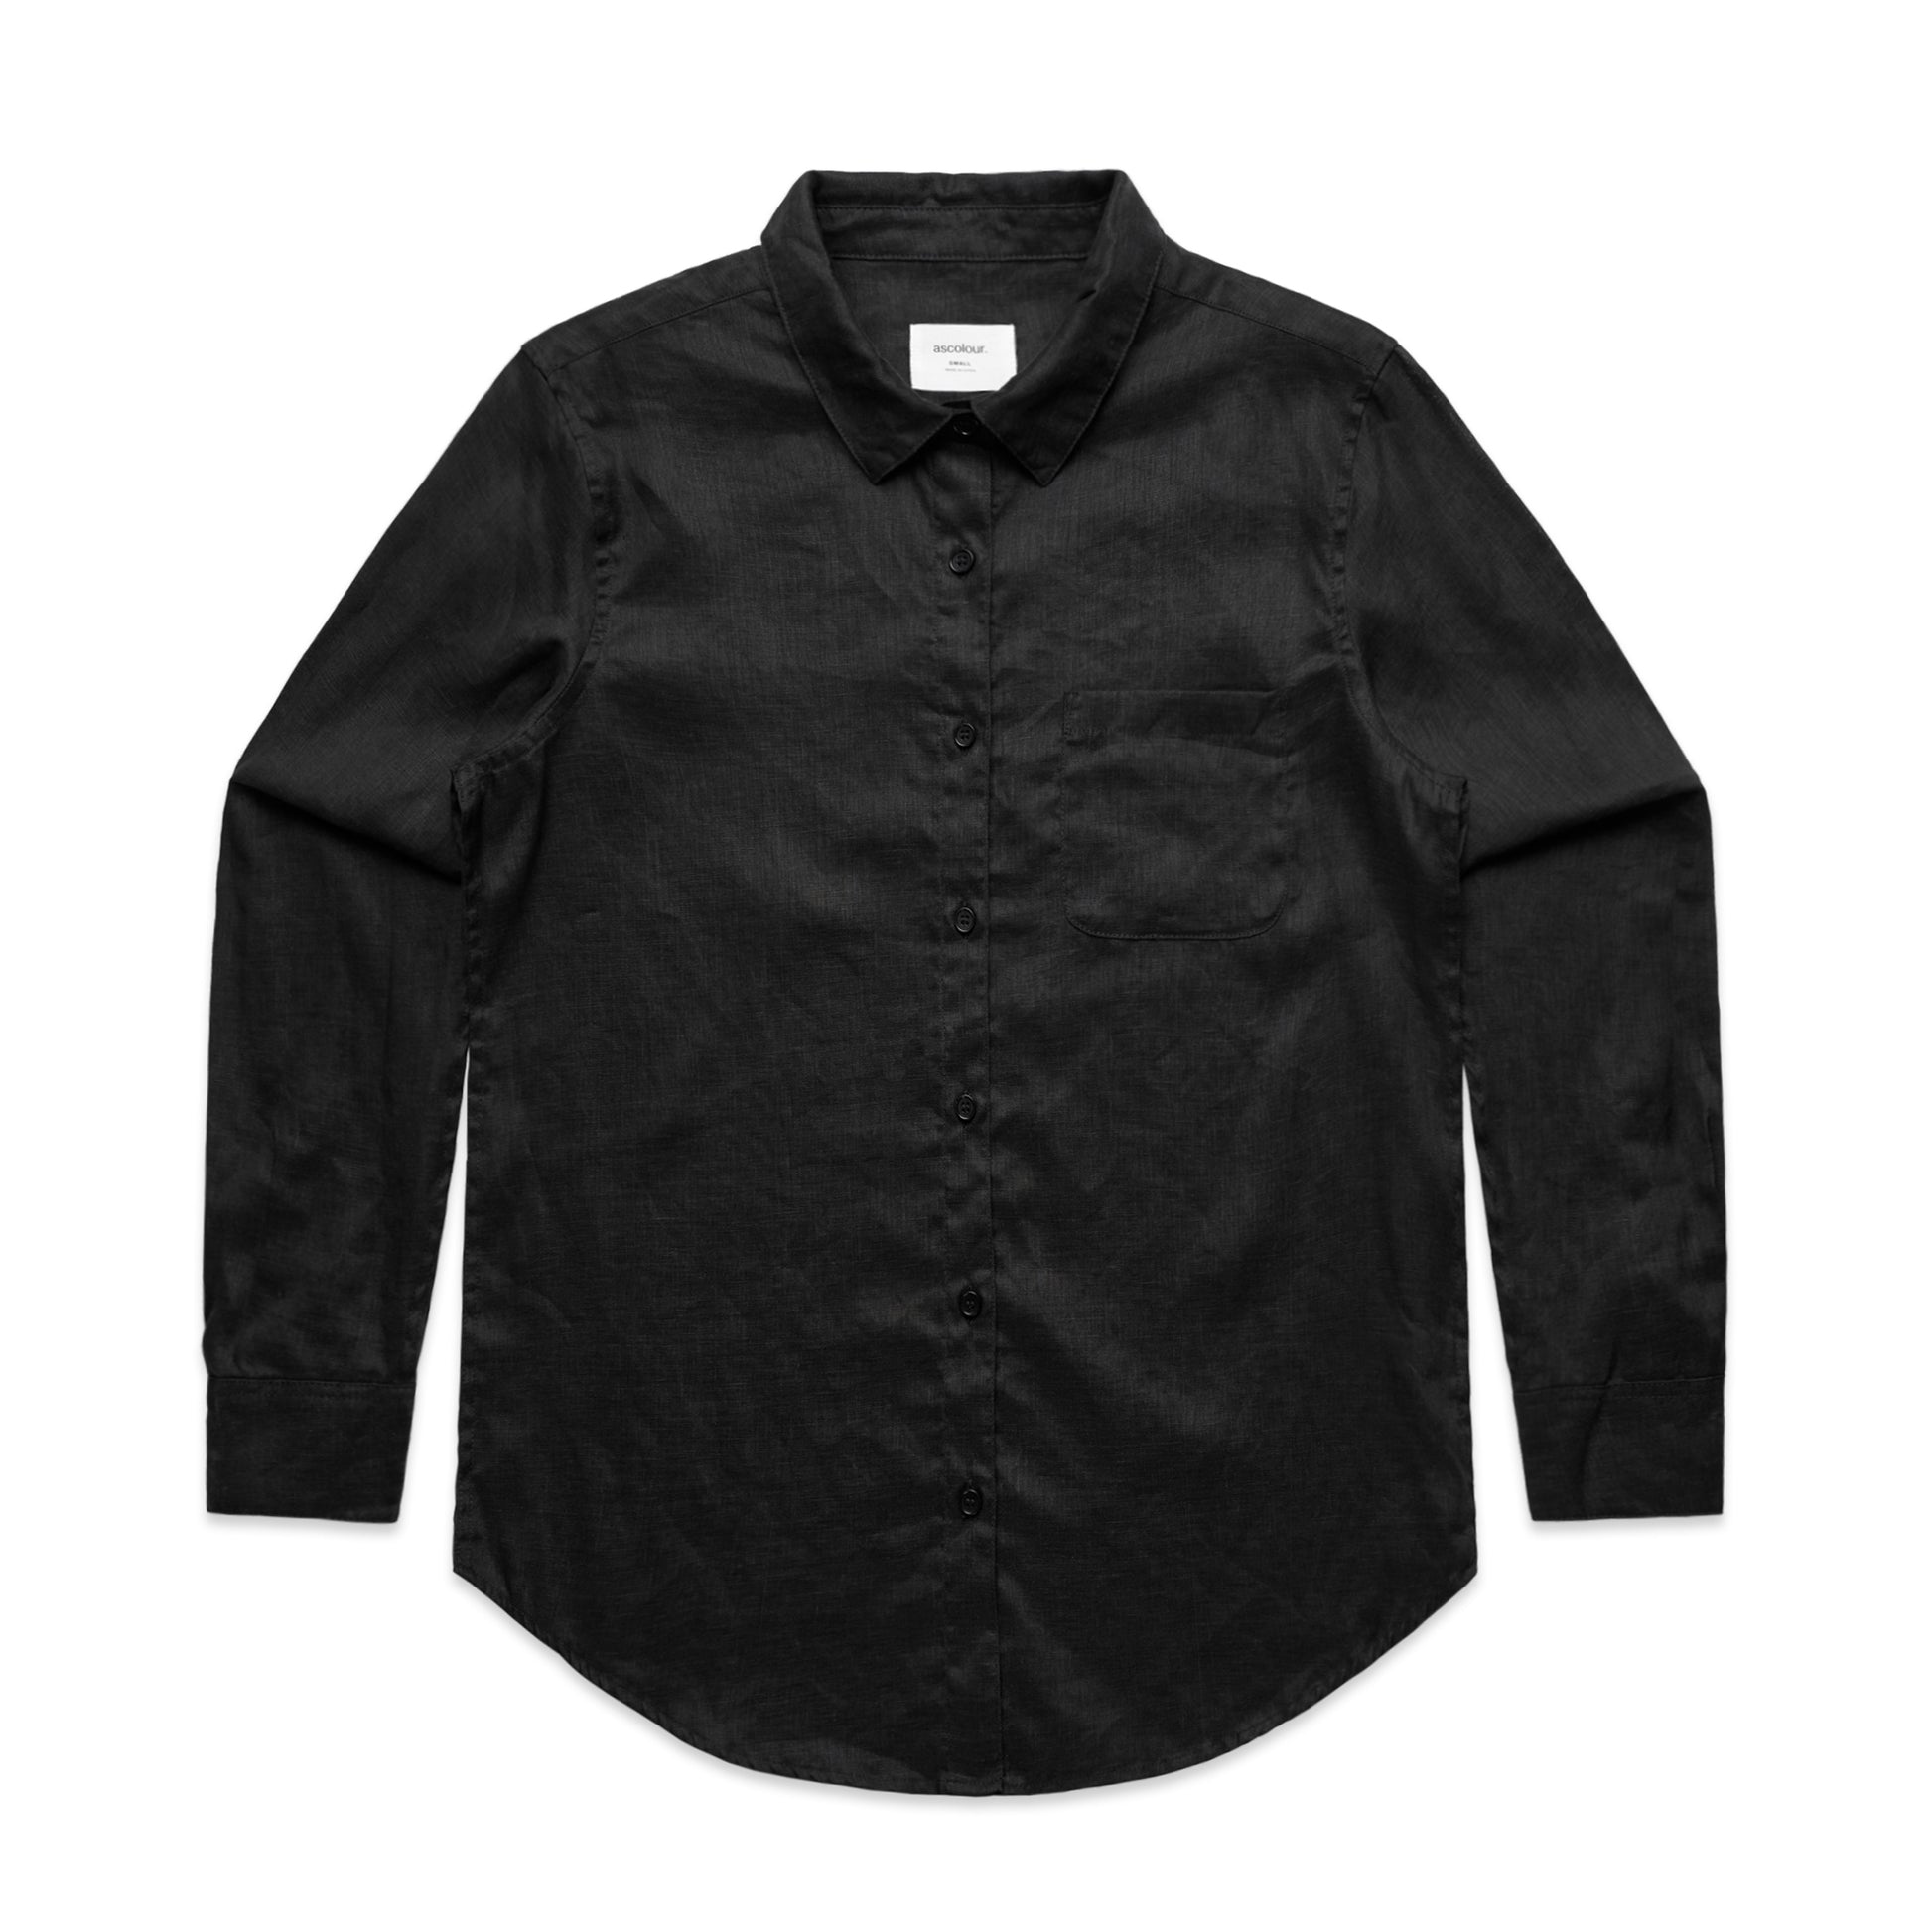 Ascolor Wo's Linen Shirt (4418)